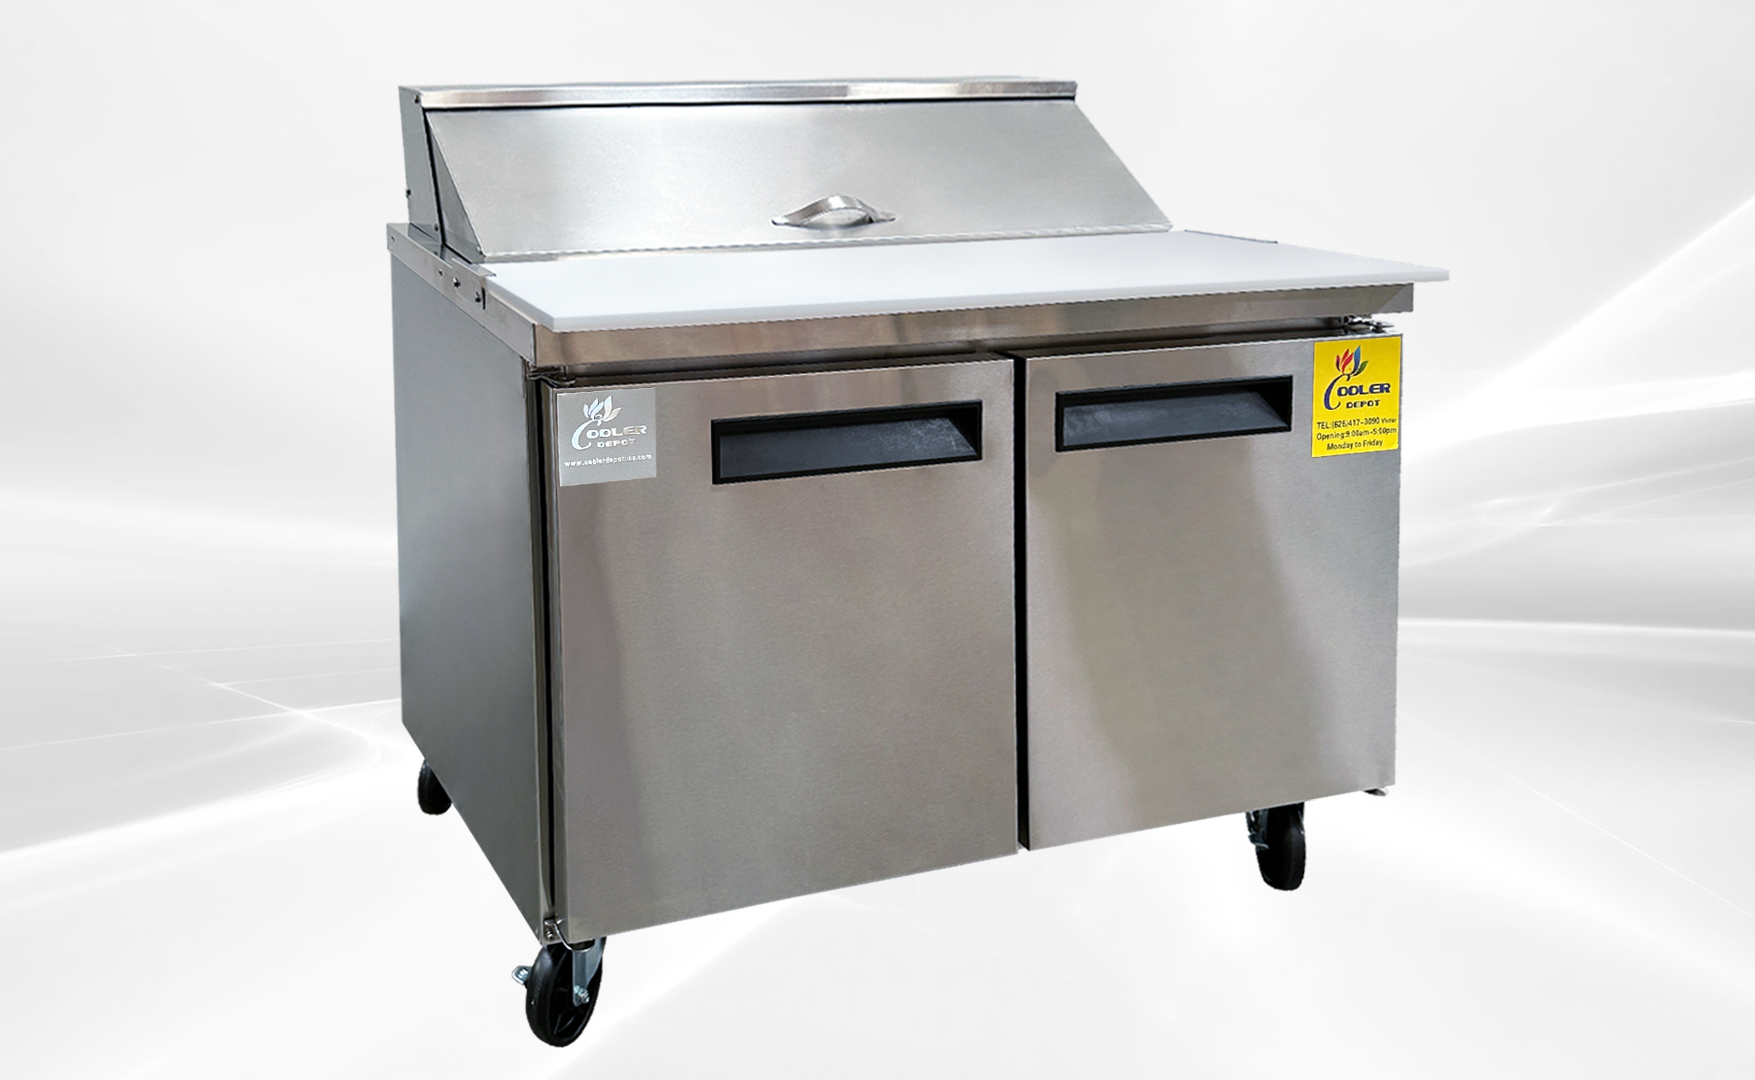 CHEF Best 1205 Pressure Cooker for Restaurants & Commercial Use